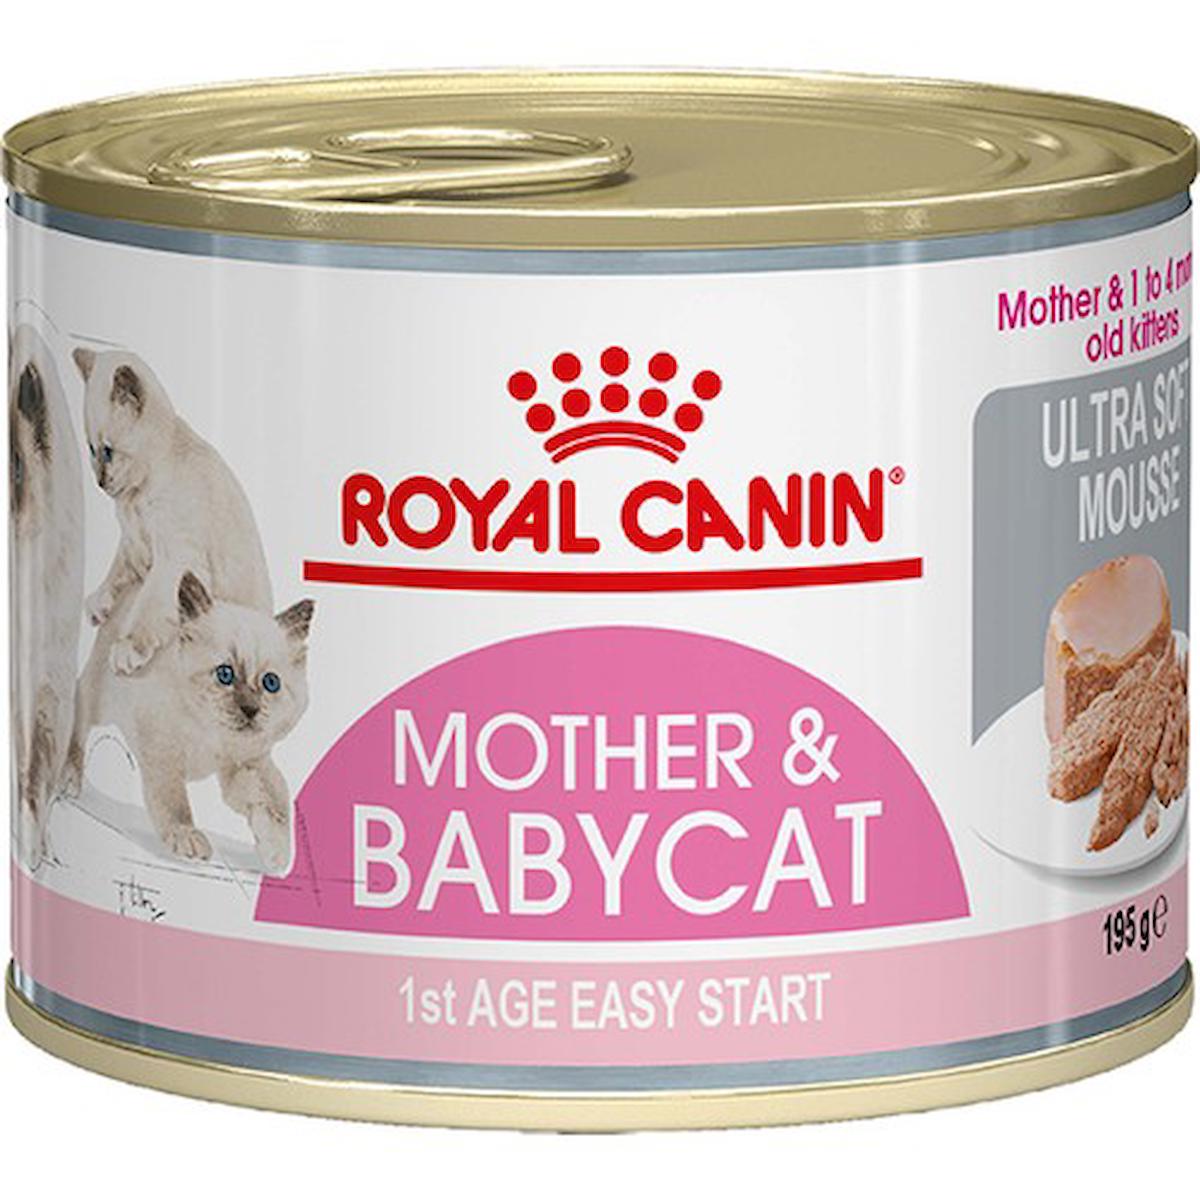 Royal Canin Mother & Babycat Etli Yetişkin Yaş Kedi Maması 12x195 gr